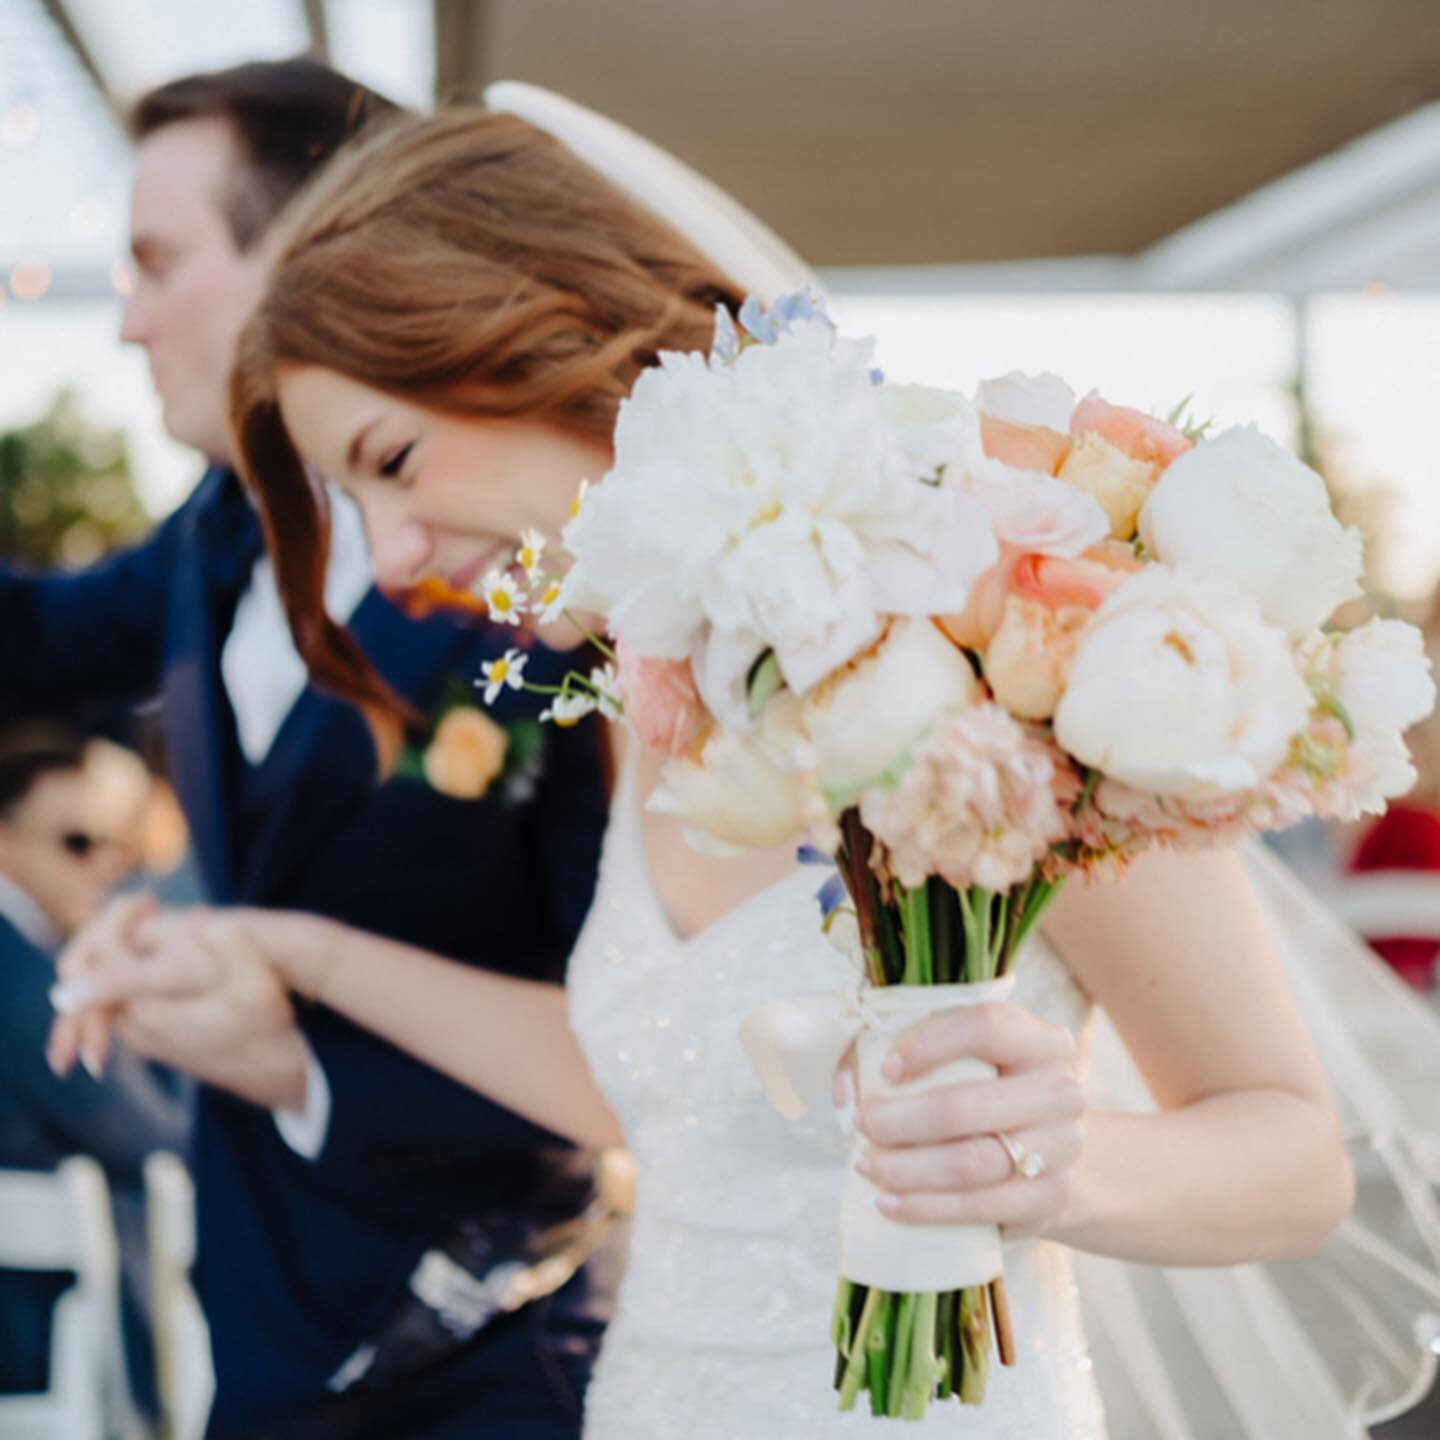 Details at Ariane &amp; Matt&rsquo;s Wedding 🧡 

Thanks again for capturing this day of love @mcneilephotography 📸

#tampabayweddings #tampaflorist #stpetewedding #stpetefloraldesign #springweddingflowers #floraldesign